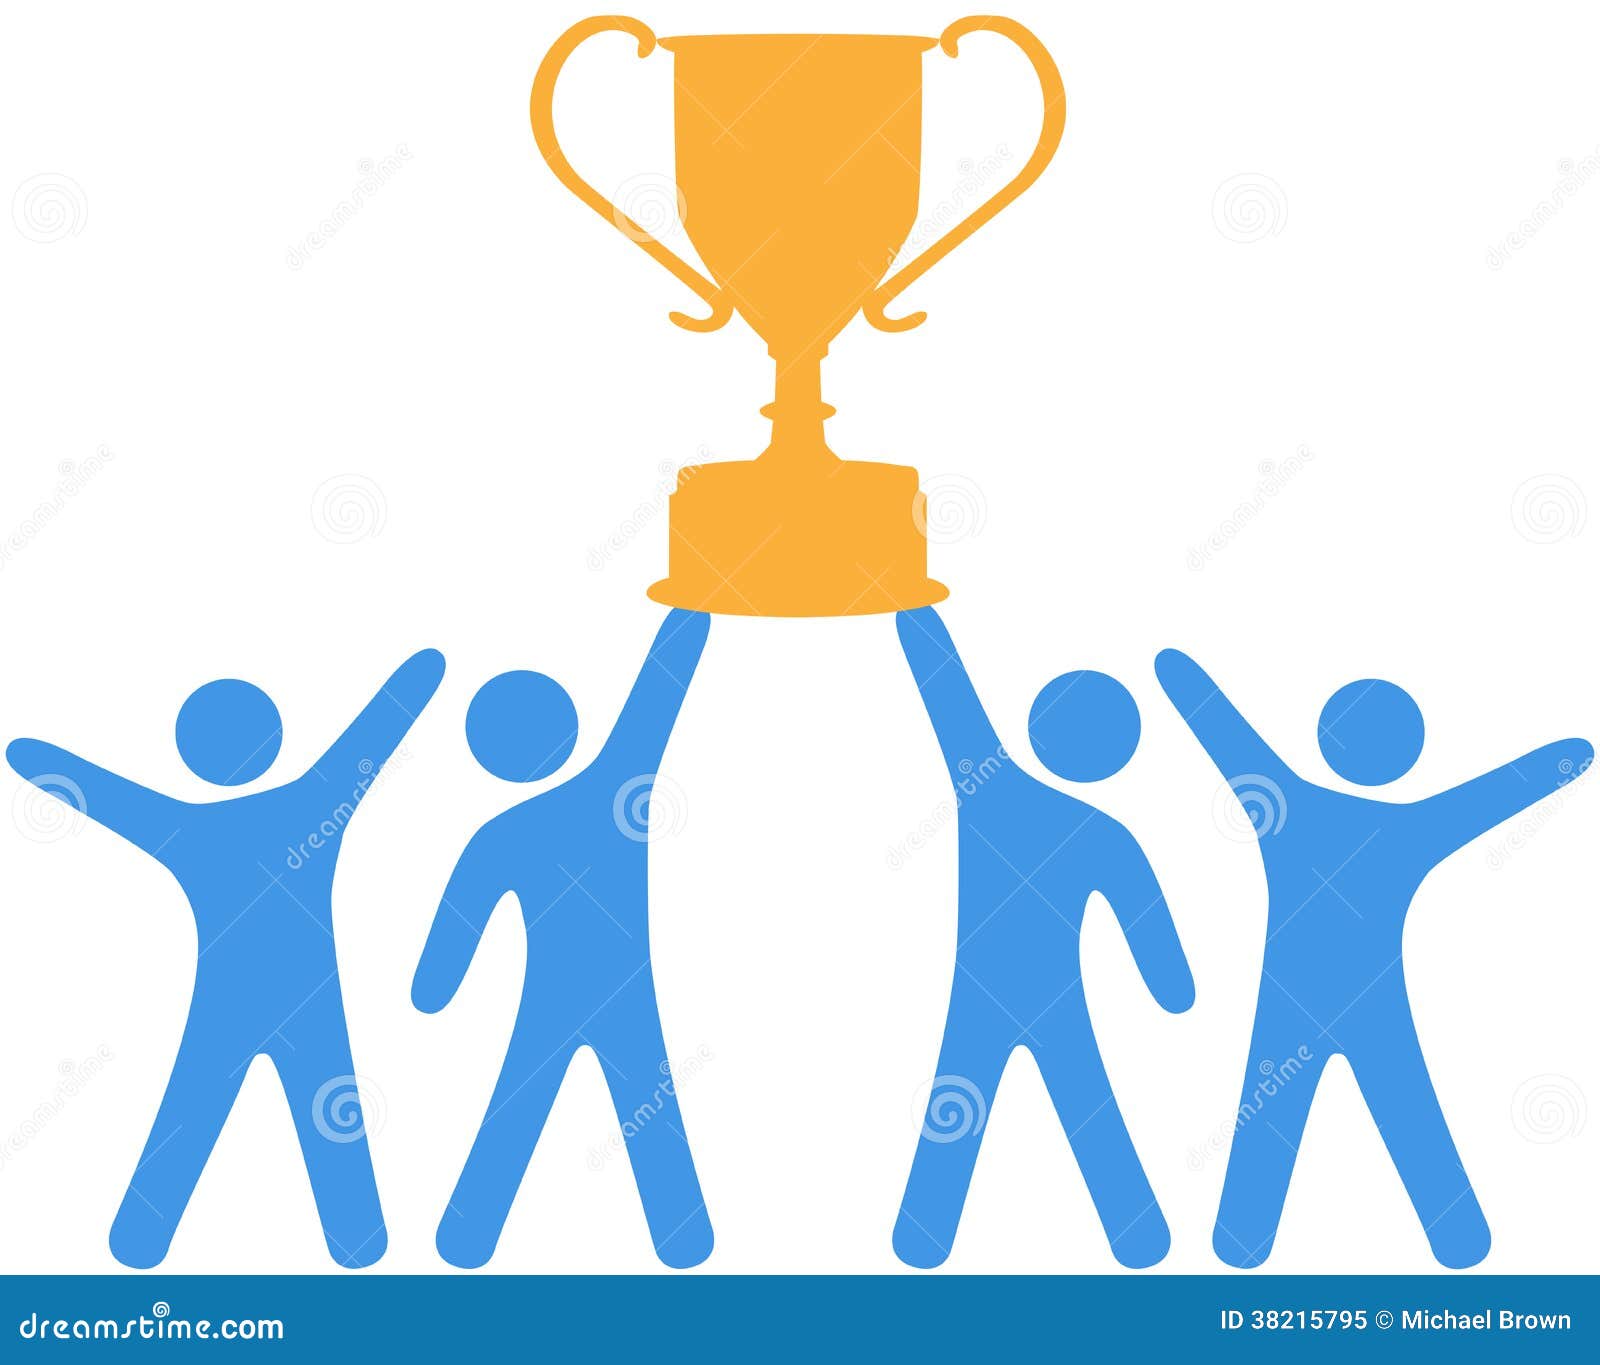 Celebrate Team Effort Winning Trophy Stock Vector Illustration Of